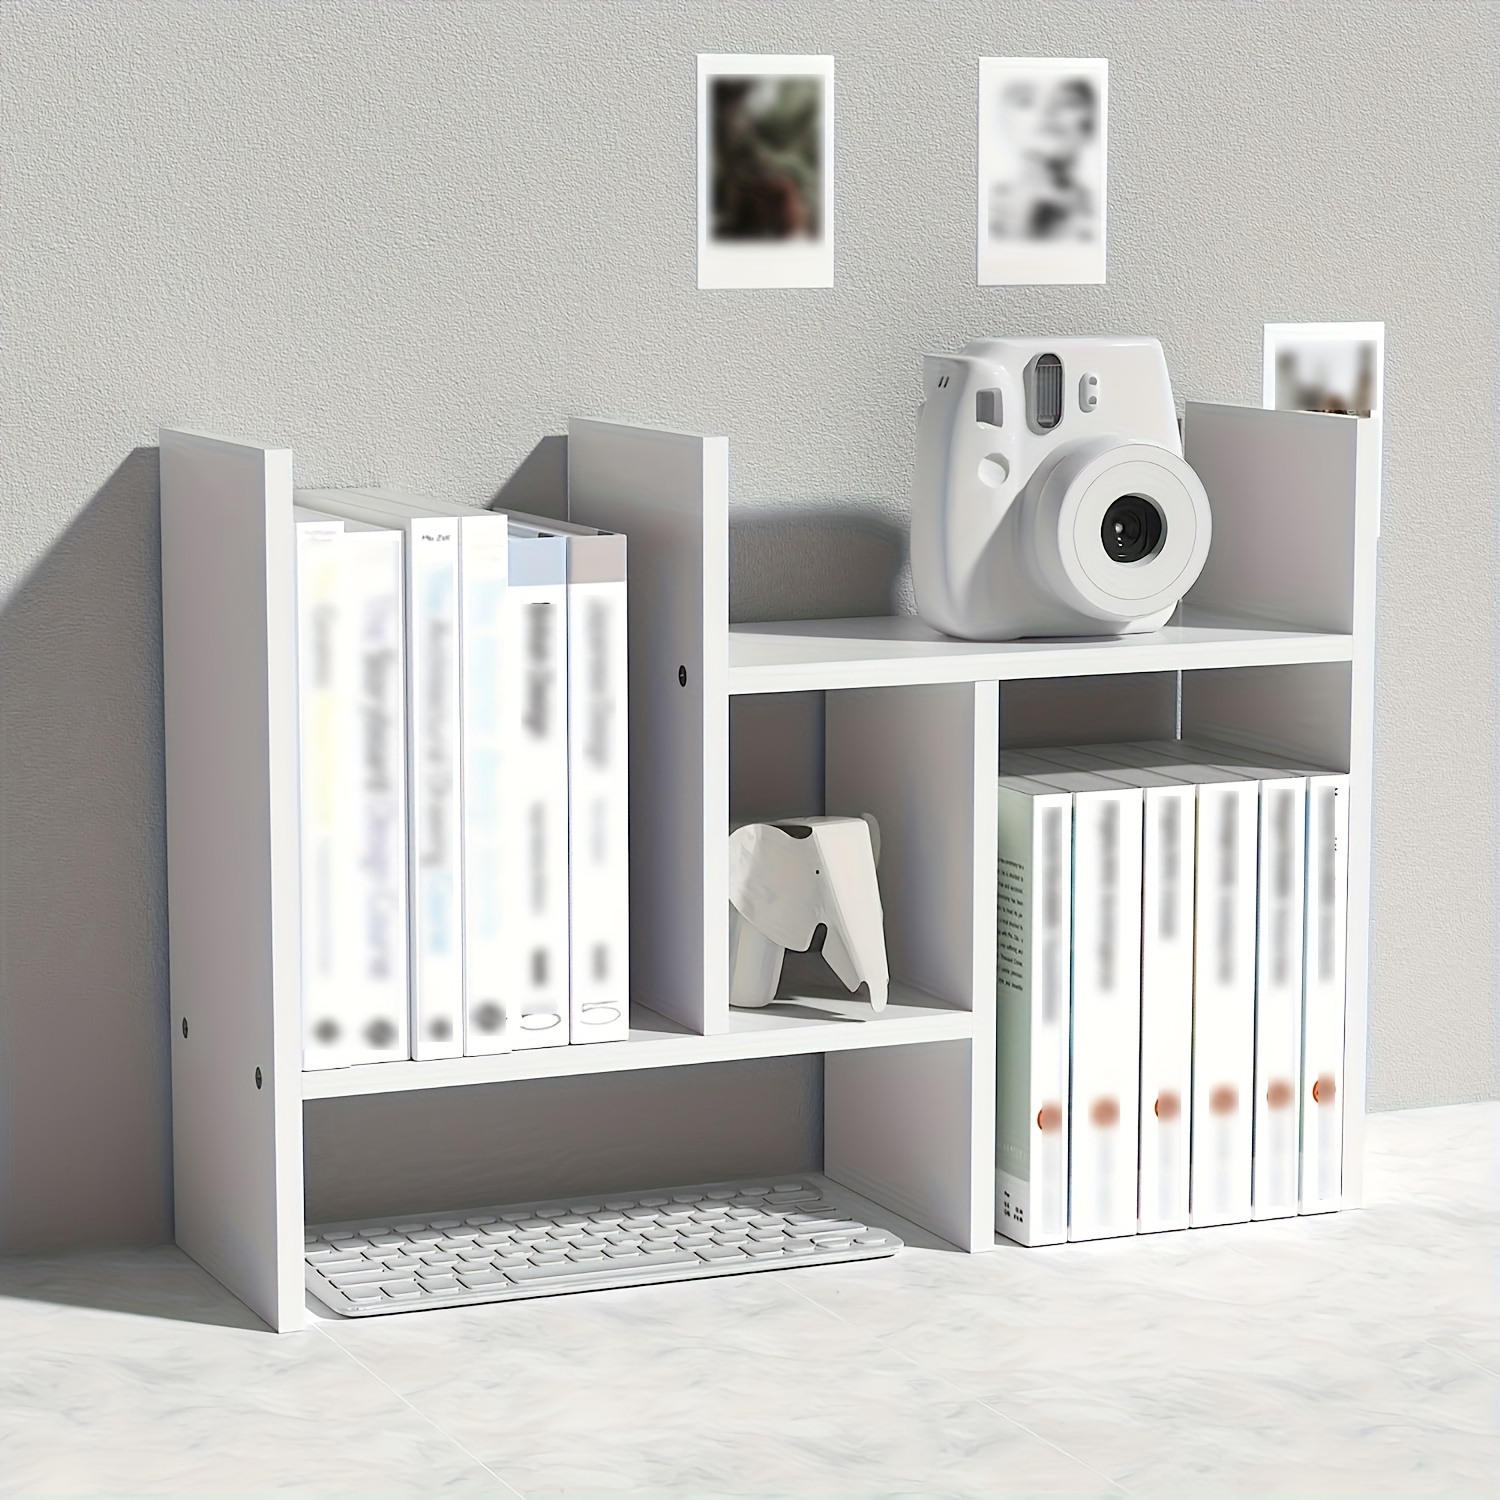 Wood Office Desk Shelf Organizer - Desktop Supplies Cute Dresser Top Organization  Storage Rack and Cubicle Decor Aesthetic Bookshelf for Women Man and Kids  (Black-Two Tier)